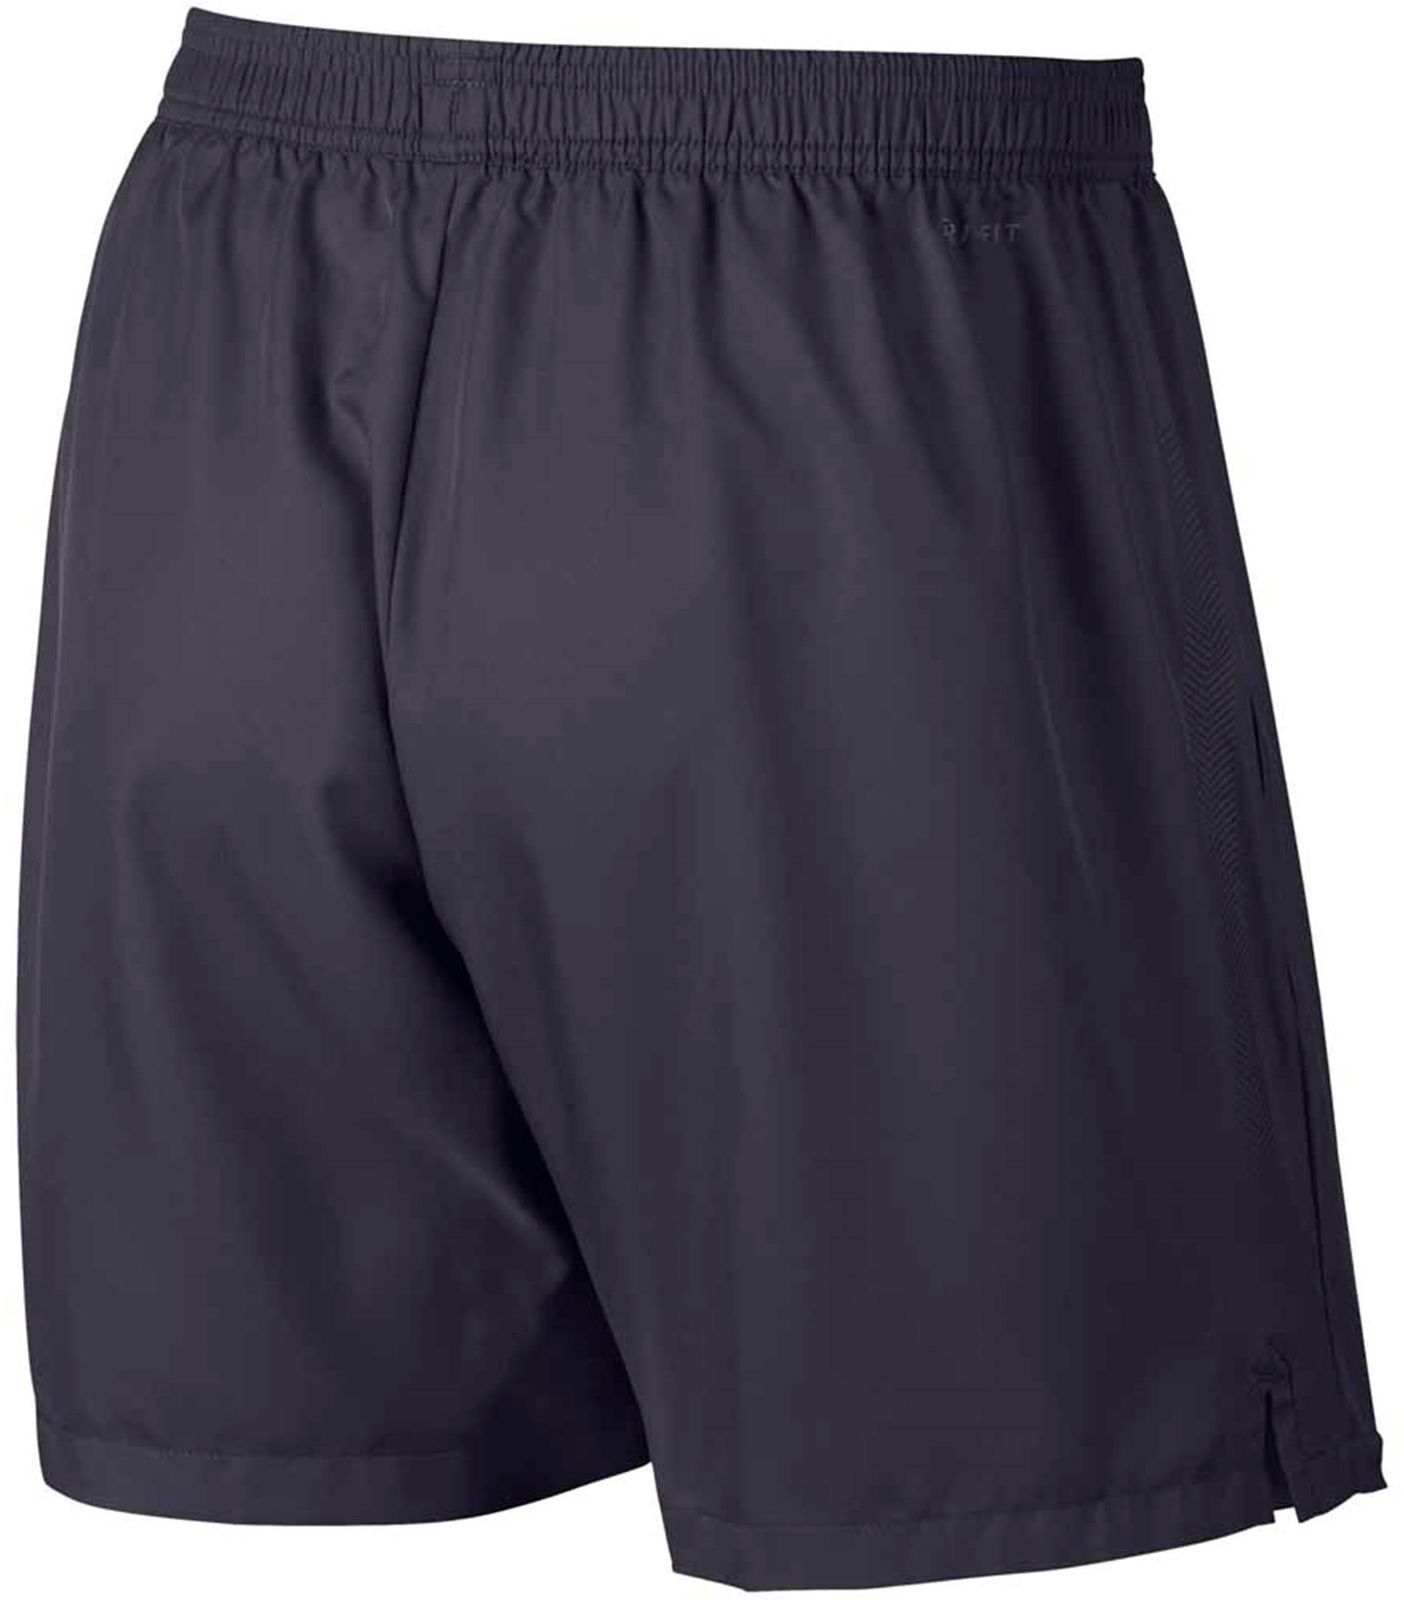   Nike Court Dry Tennis Short, : -. 830817-009.  S (44/46)